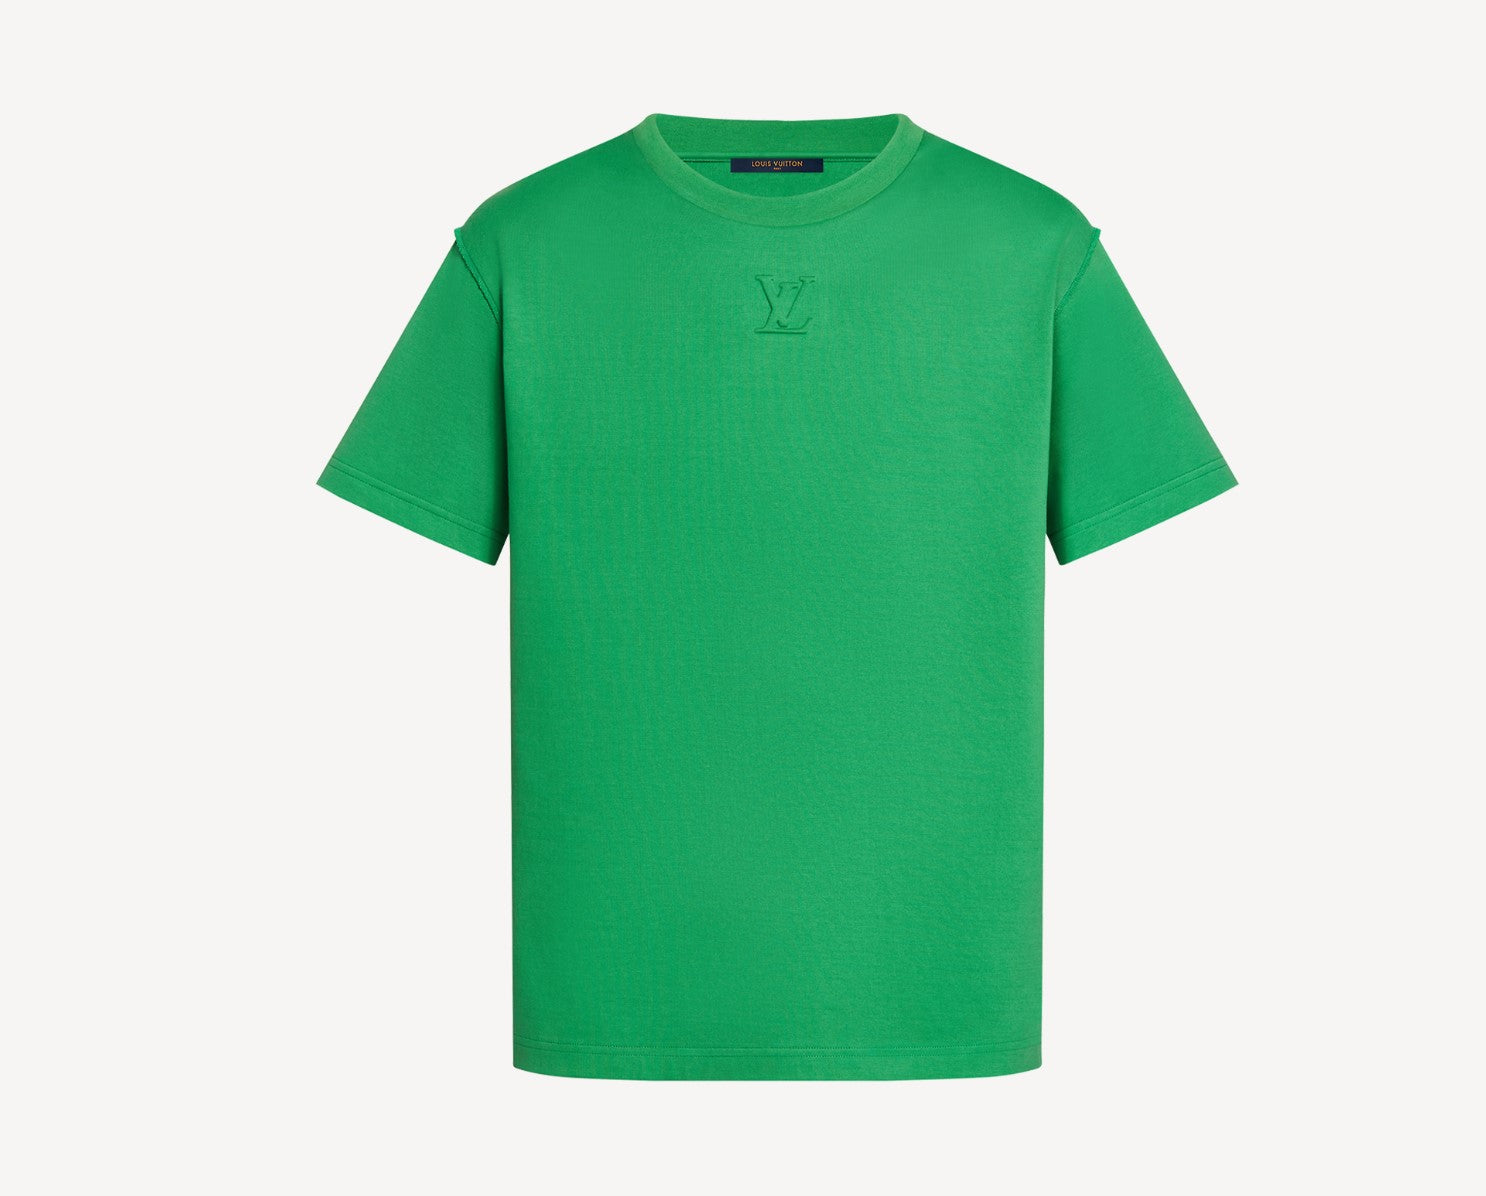 Louis Vuitton Debossed Tee Shirt green sz M